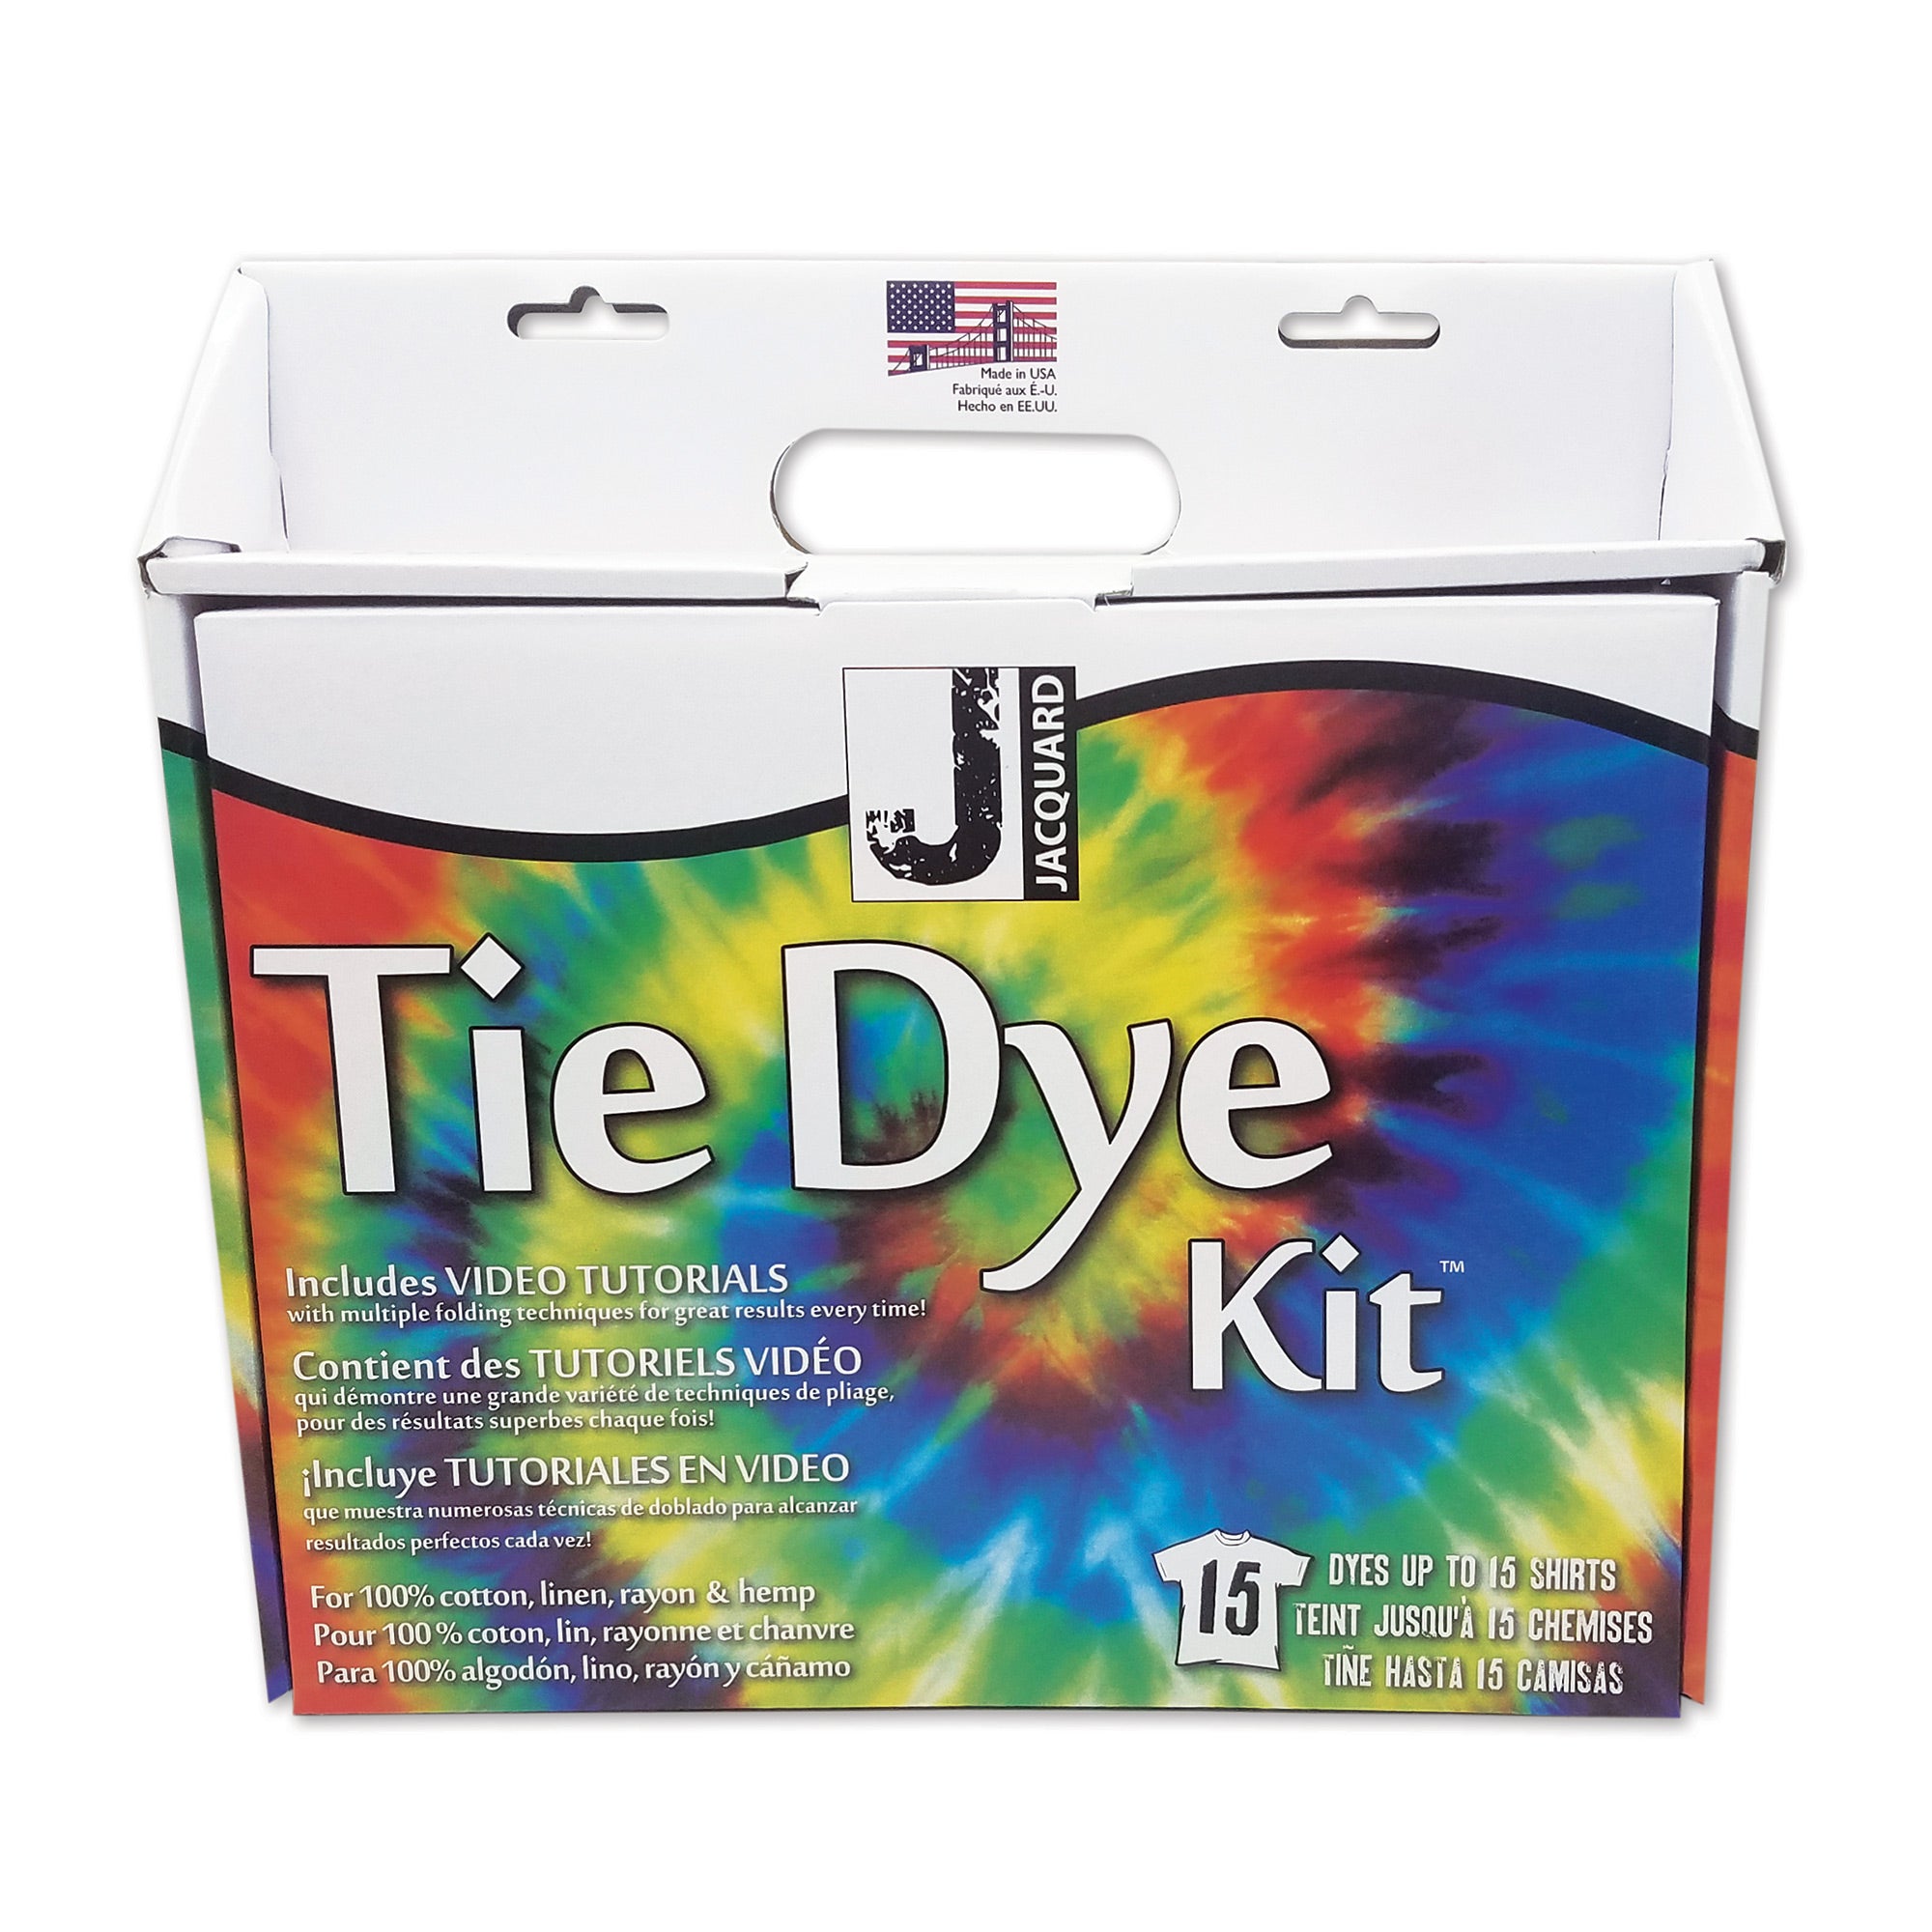 Indigo natural dye kit - DT Craft and Design